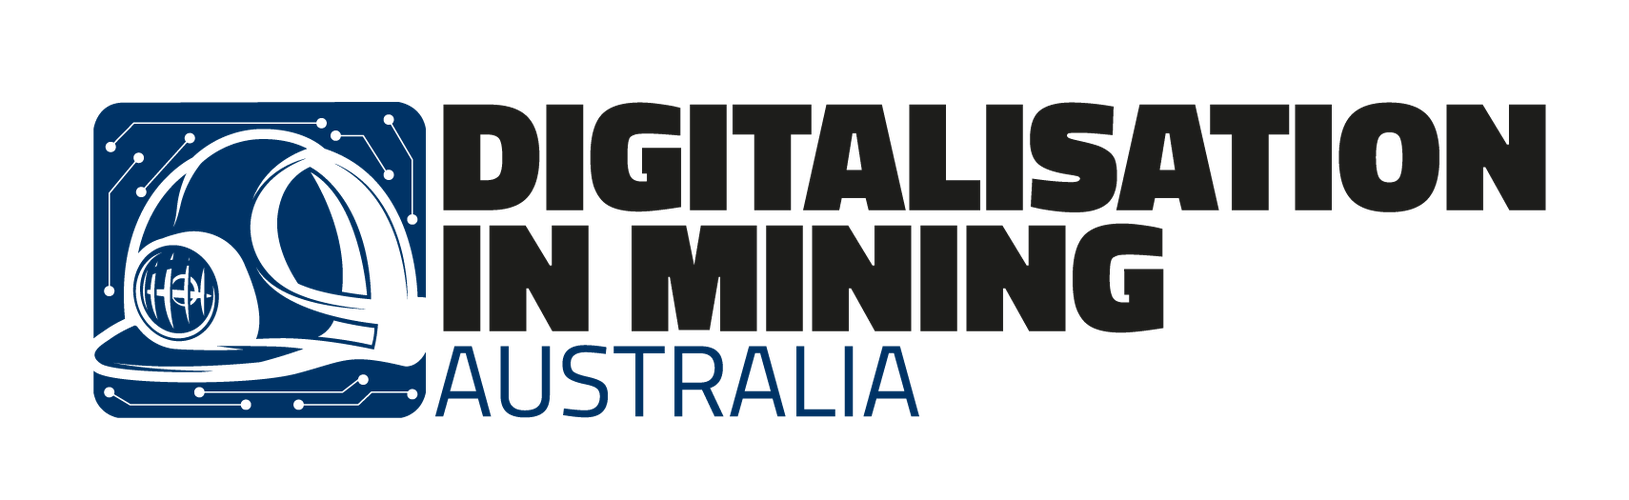 Digitalisation Mining Australia